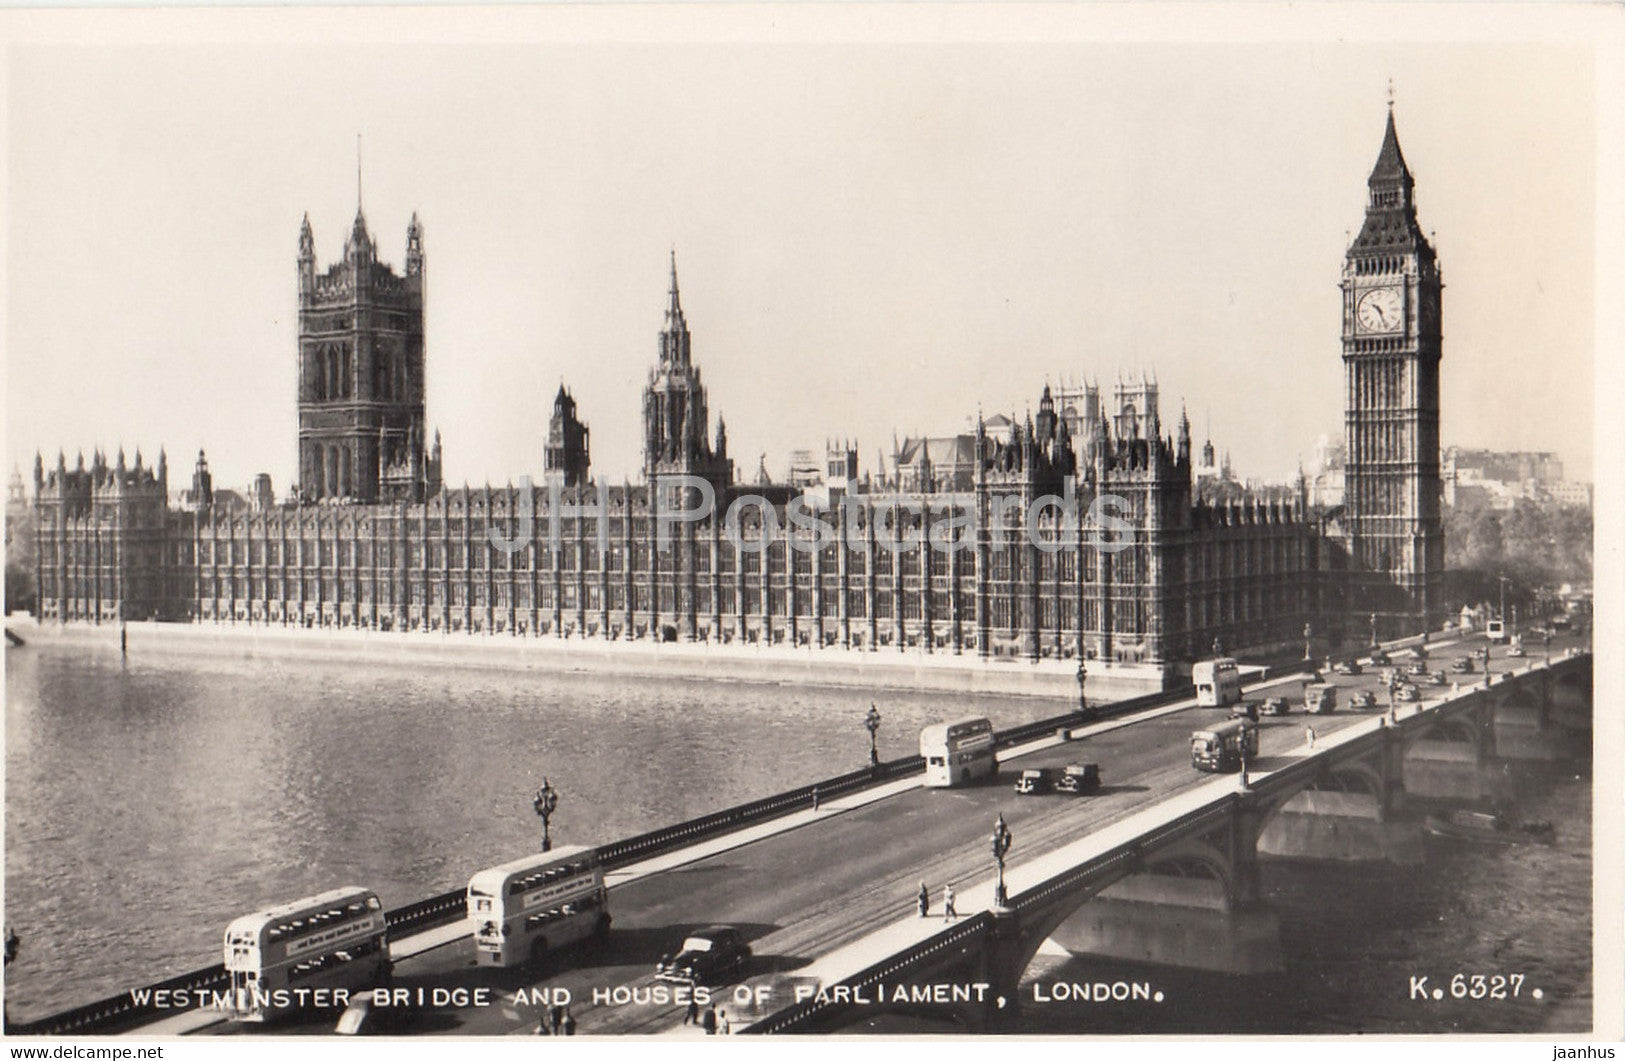 London - Westminster Bridge and Houses of Parliament - bus - England - United Kingdom - unused - JH Postcards